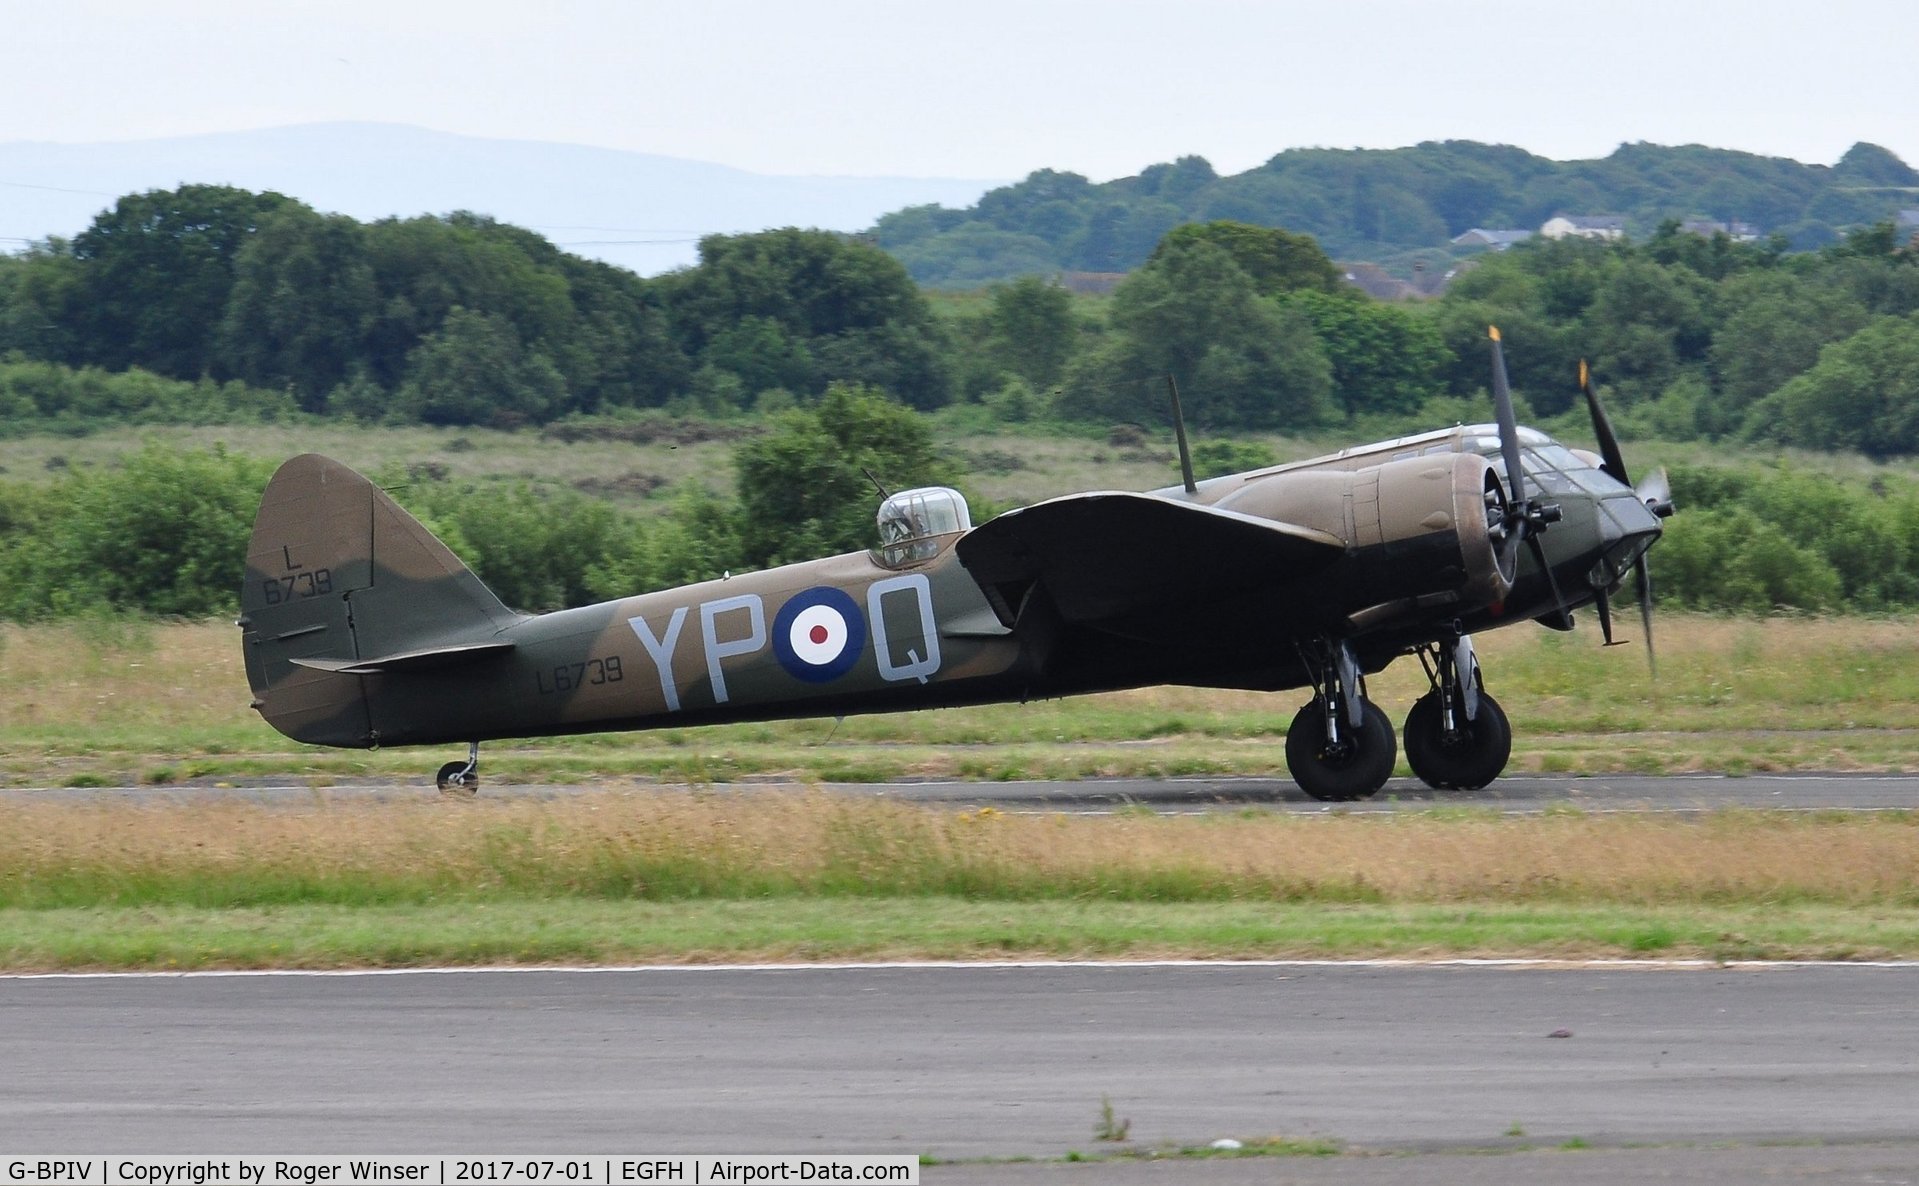 G-BPIV, 1943 Bristol 149 Bolingbroke Mk.IVT C/N 10201, Representing Bristol Blenheim 1f aircraft L6739 coded YP-Q of 23 Squadron RAF.